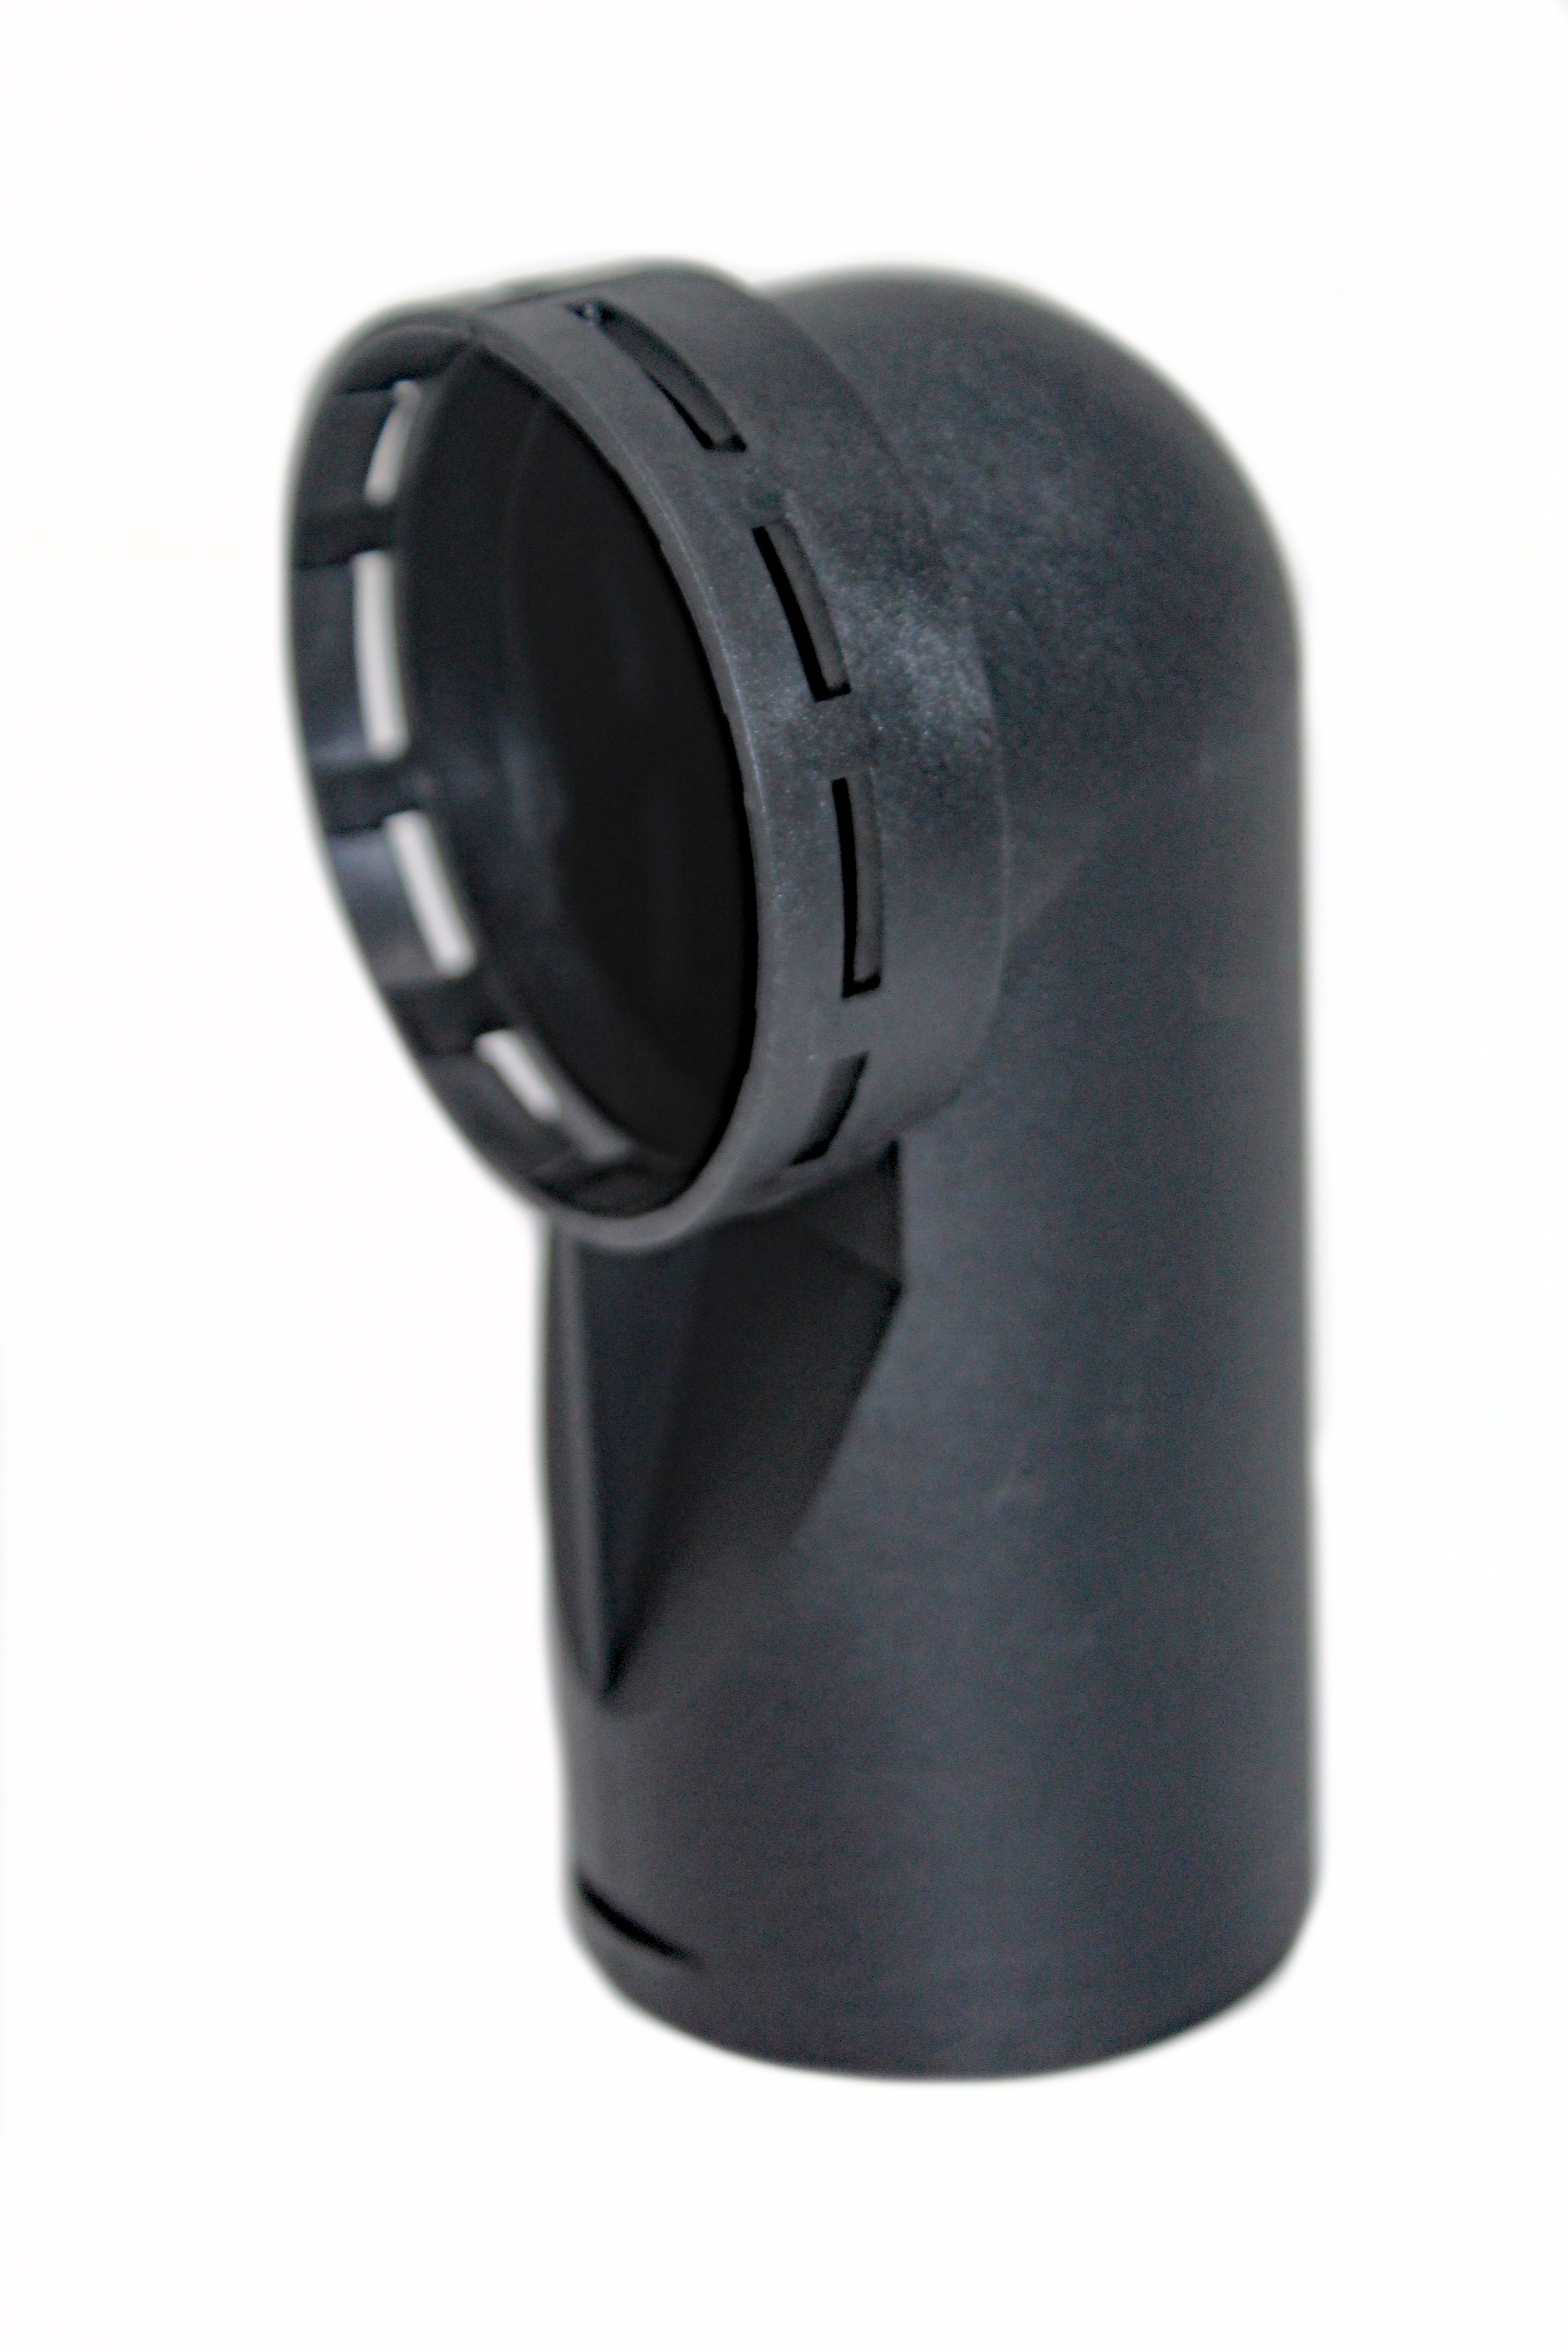 Webasto 60mm Adjustable Ducting Elbow 29849A